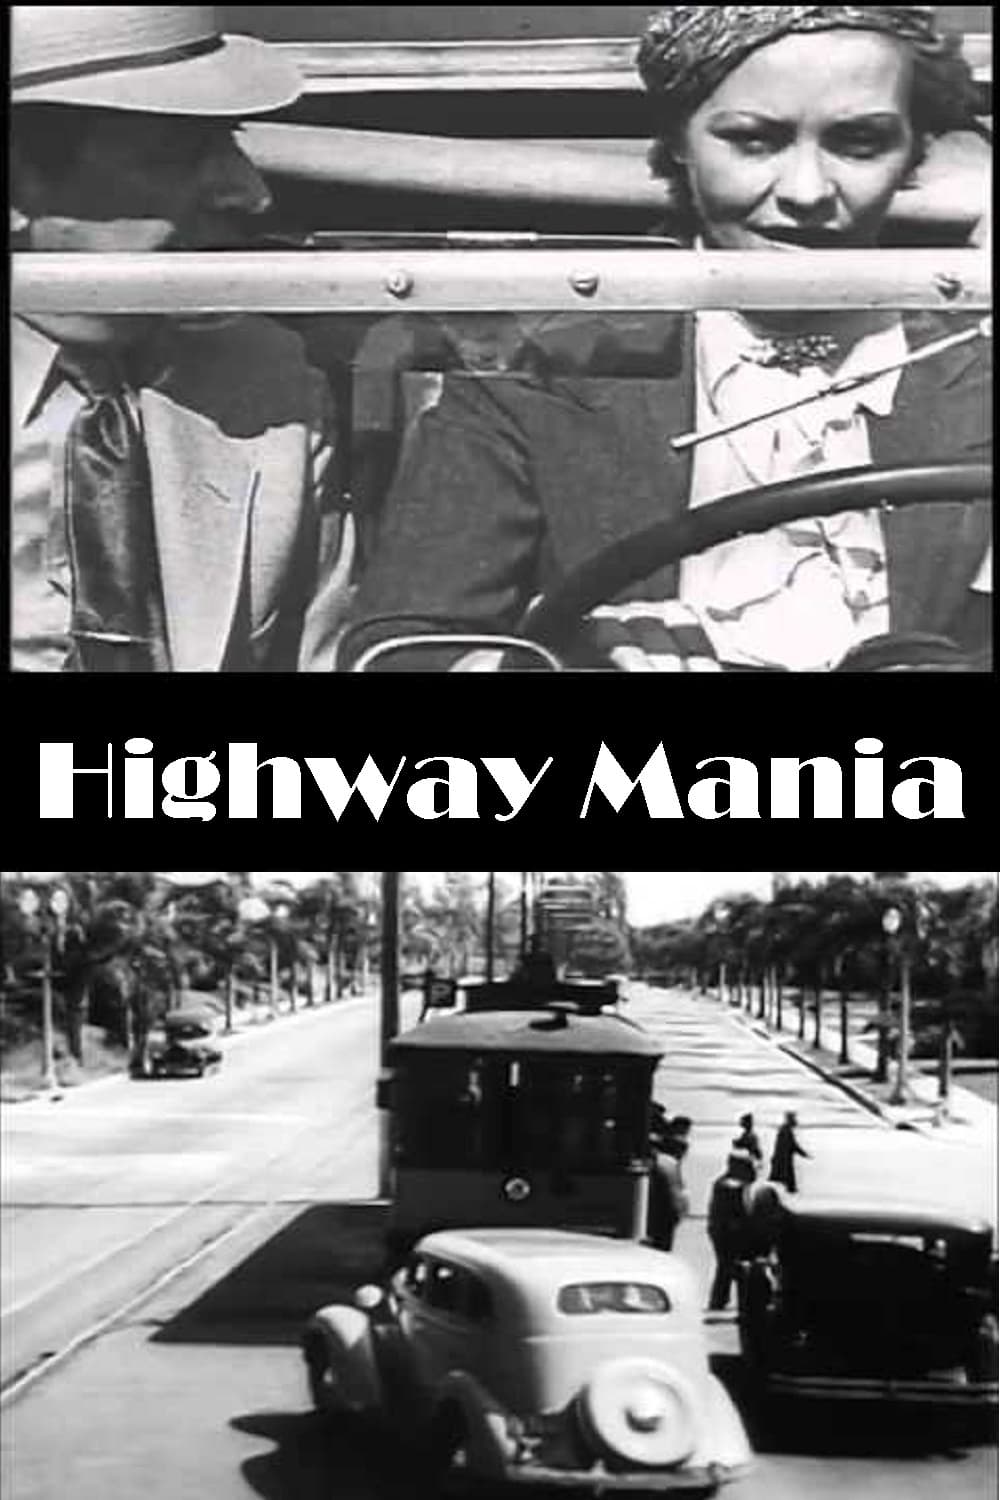 Highway Mania